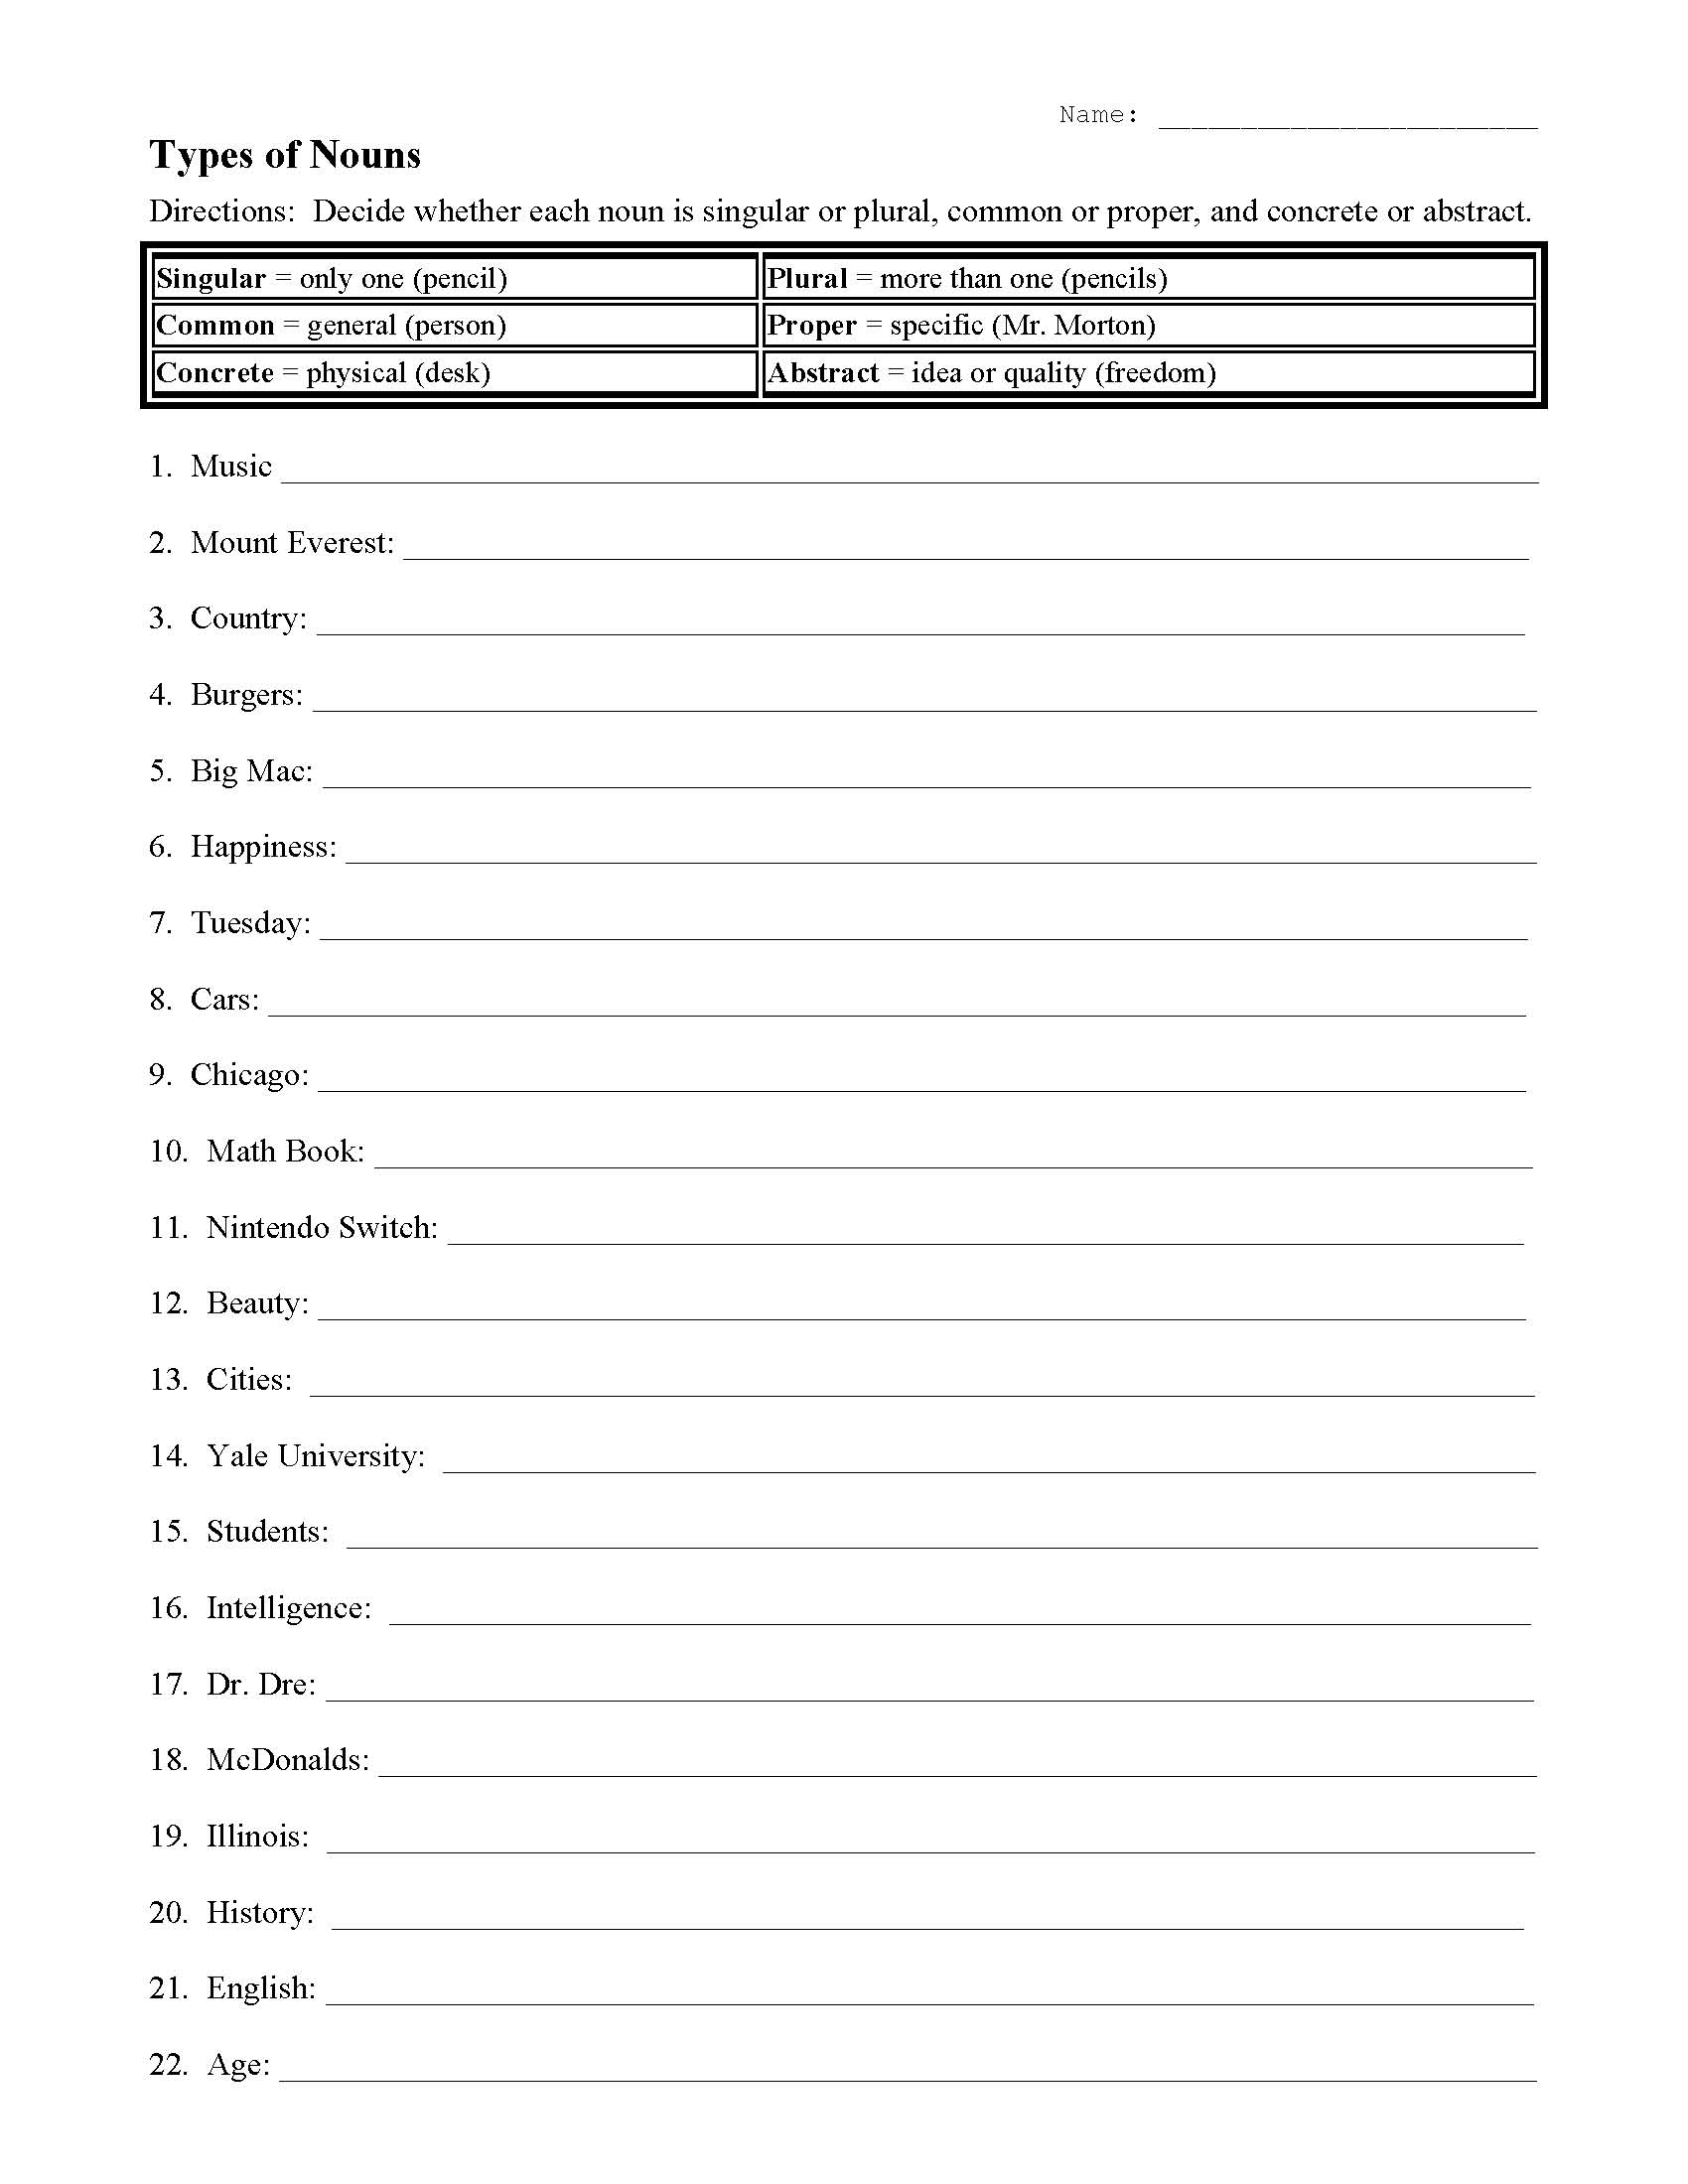 noun-types-worksheet-2-preview